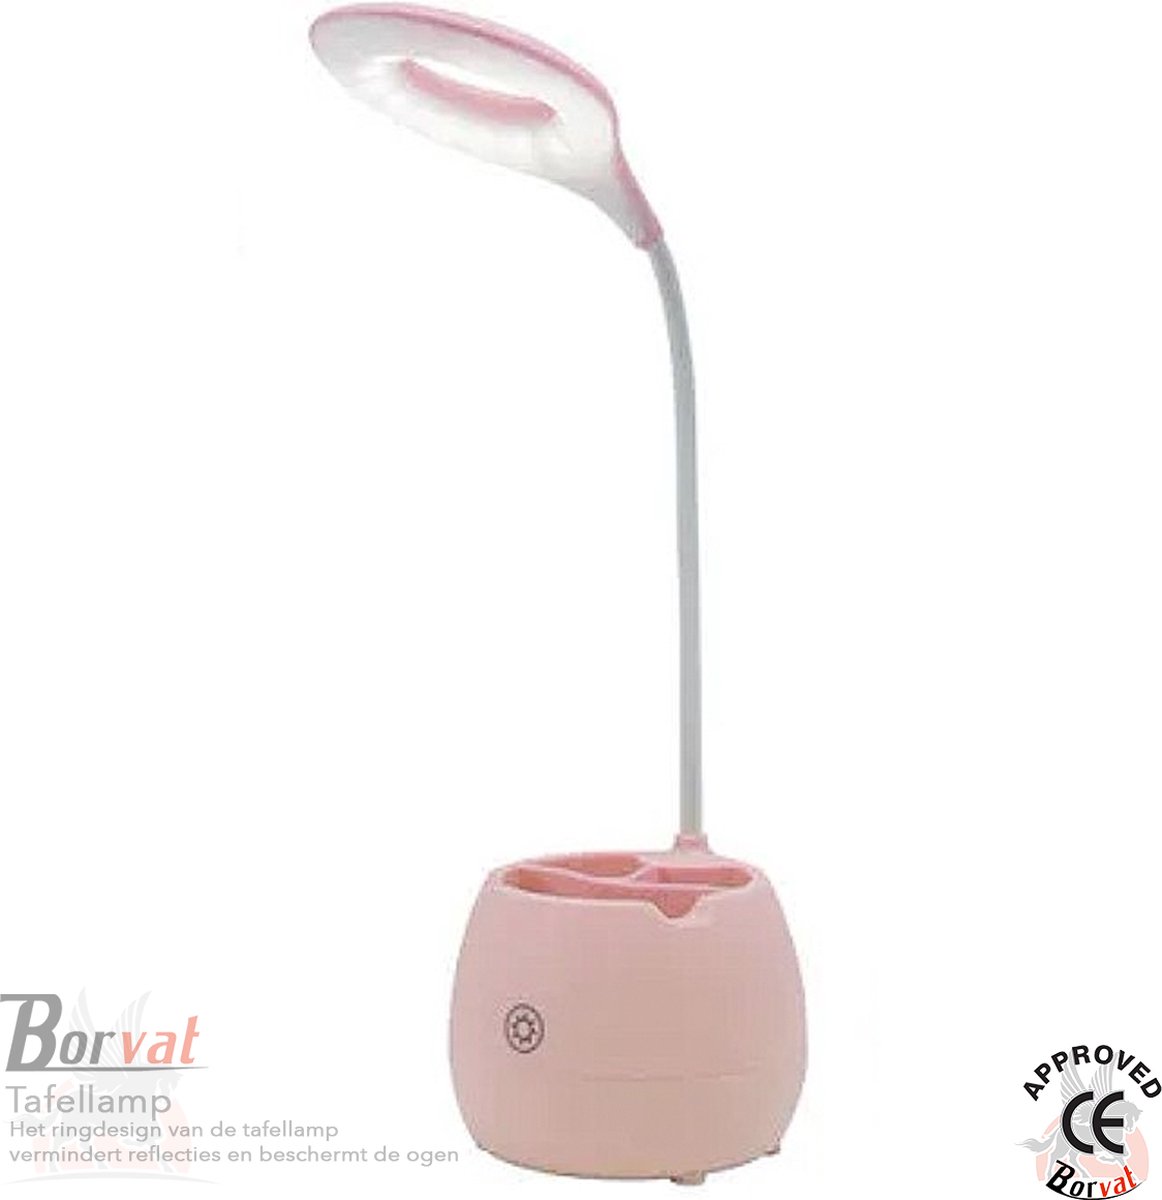 Borvat® - Tafellamp LED-aanraking met Penhouder - standaard Bureau-organizer - Slimme LED sfeerverlichting - nachtlampje voor Slaapkamerkantoor